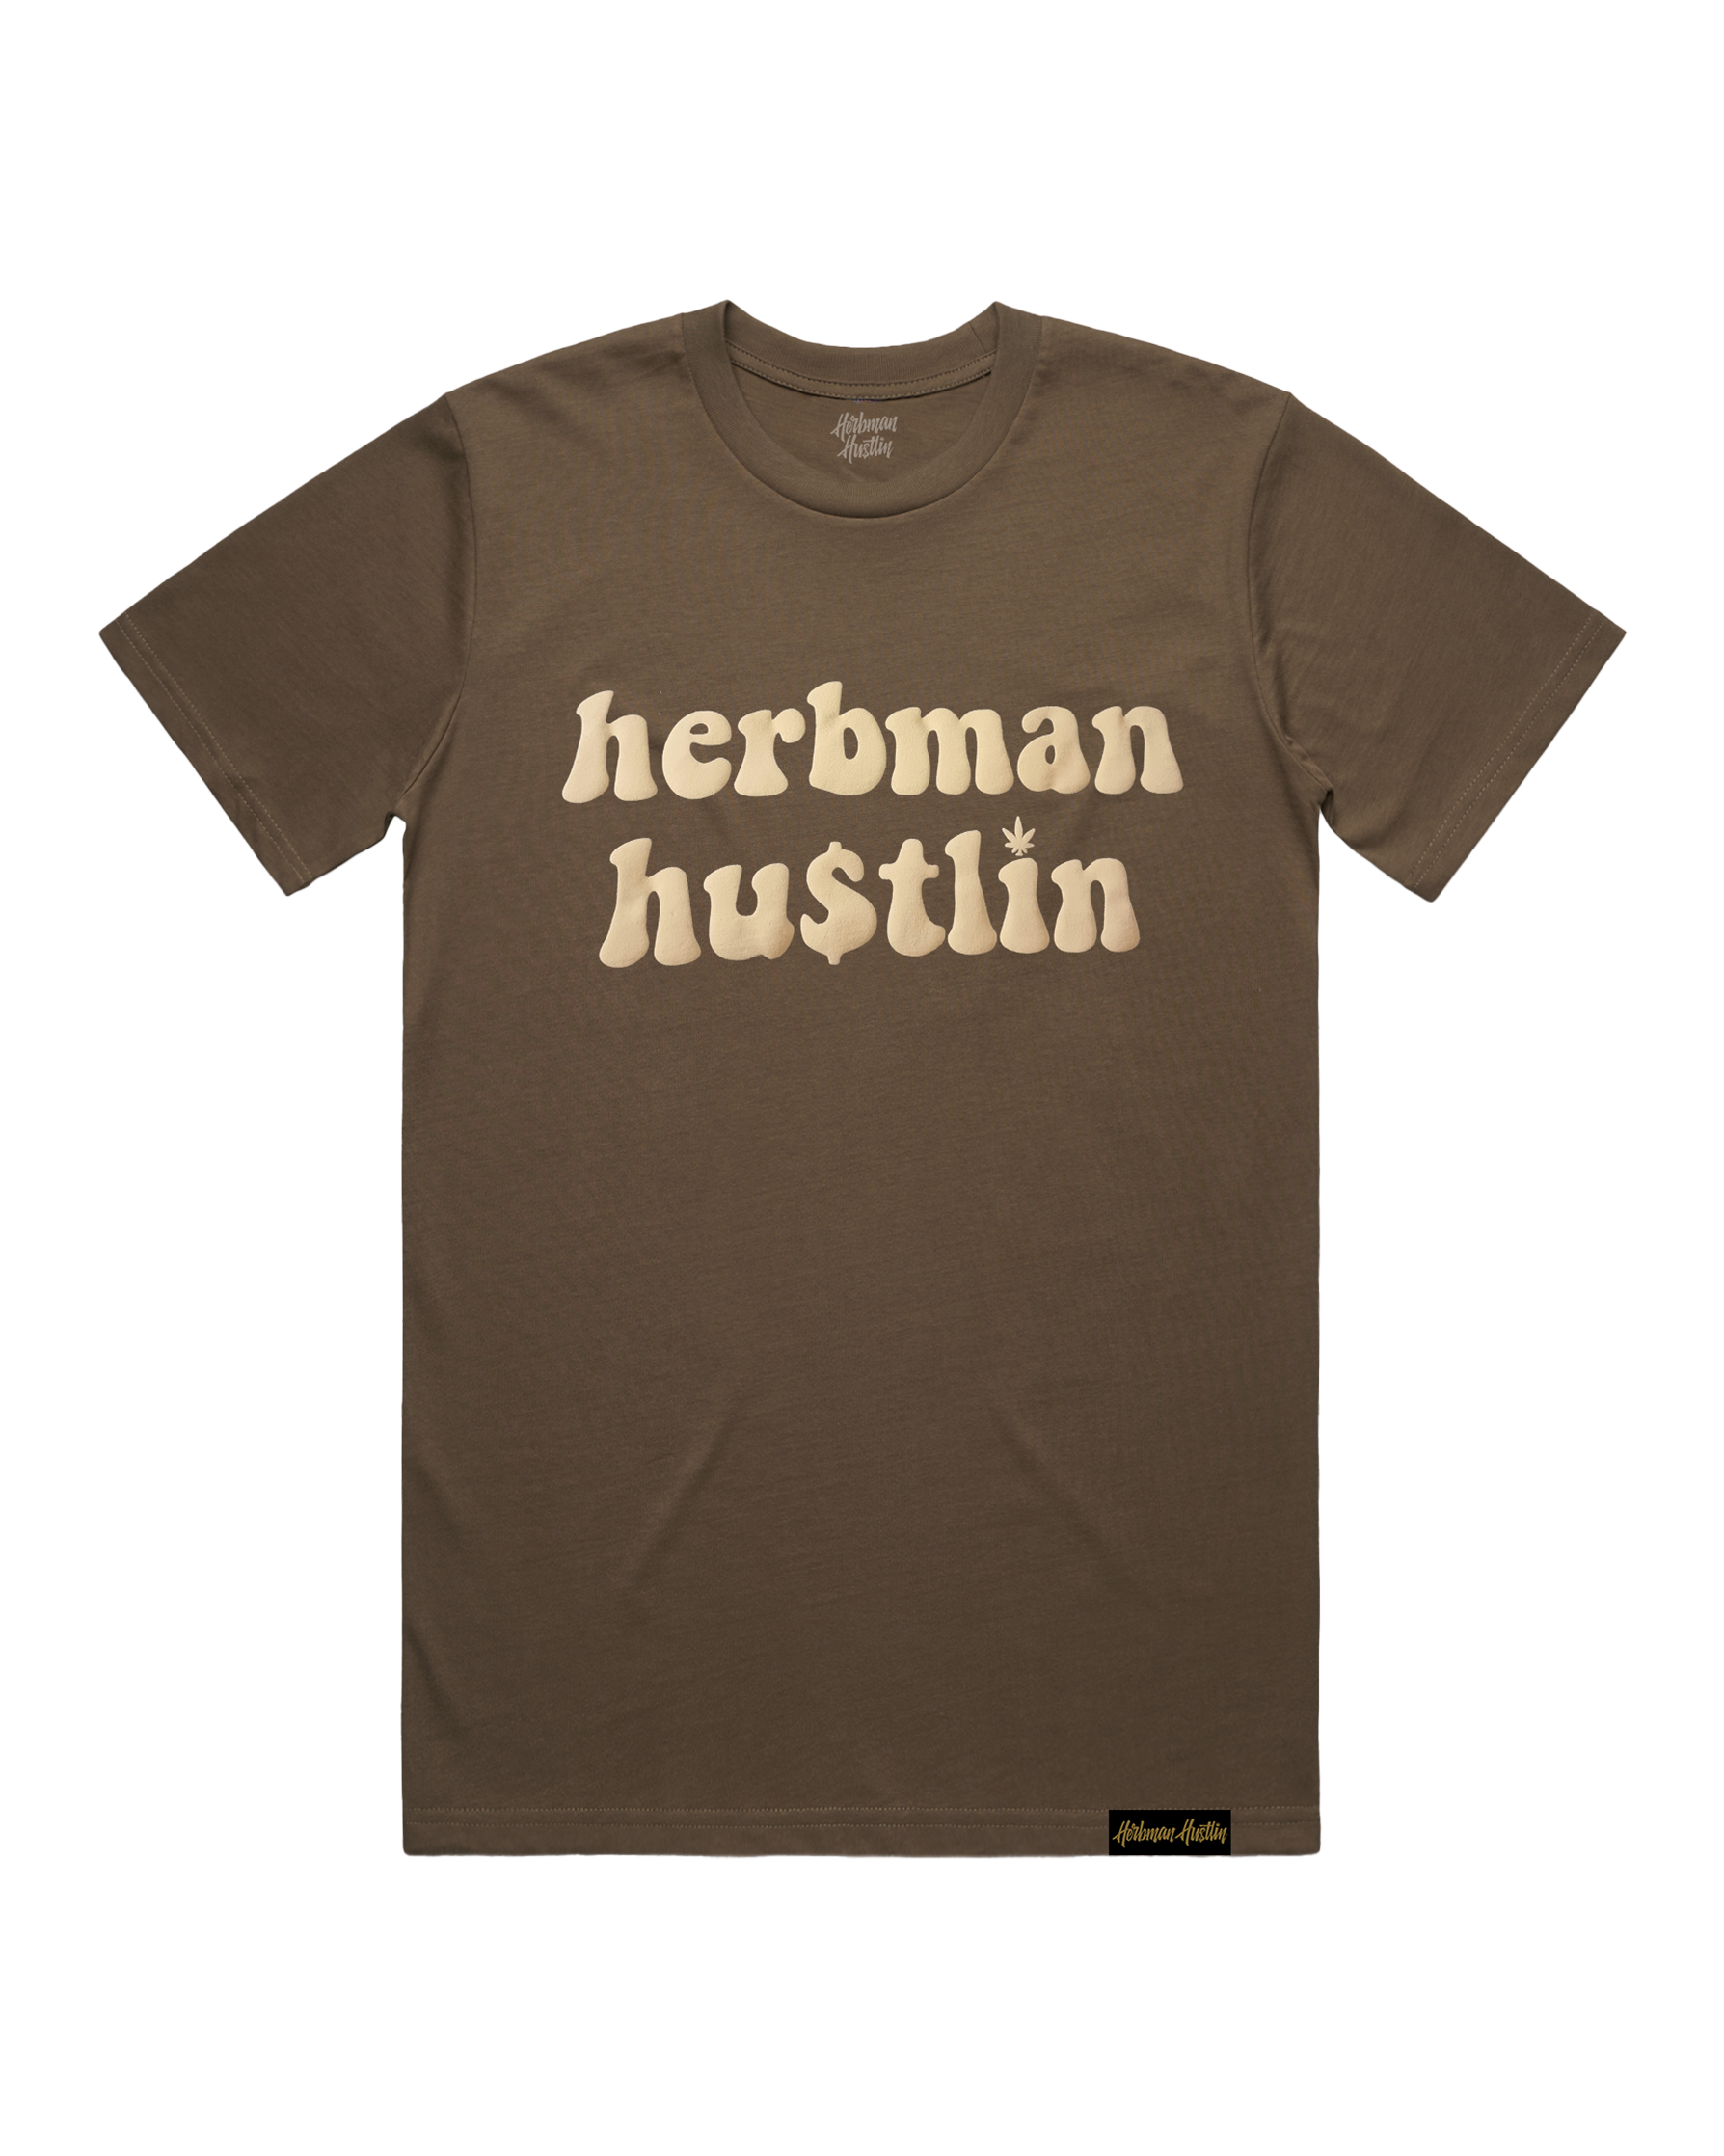 Herbman Hustlin Puff Puff Tee - Coffee & Cream Edition